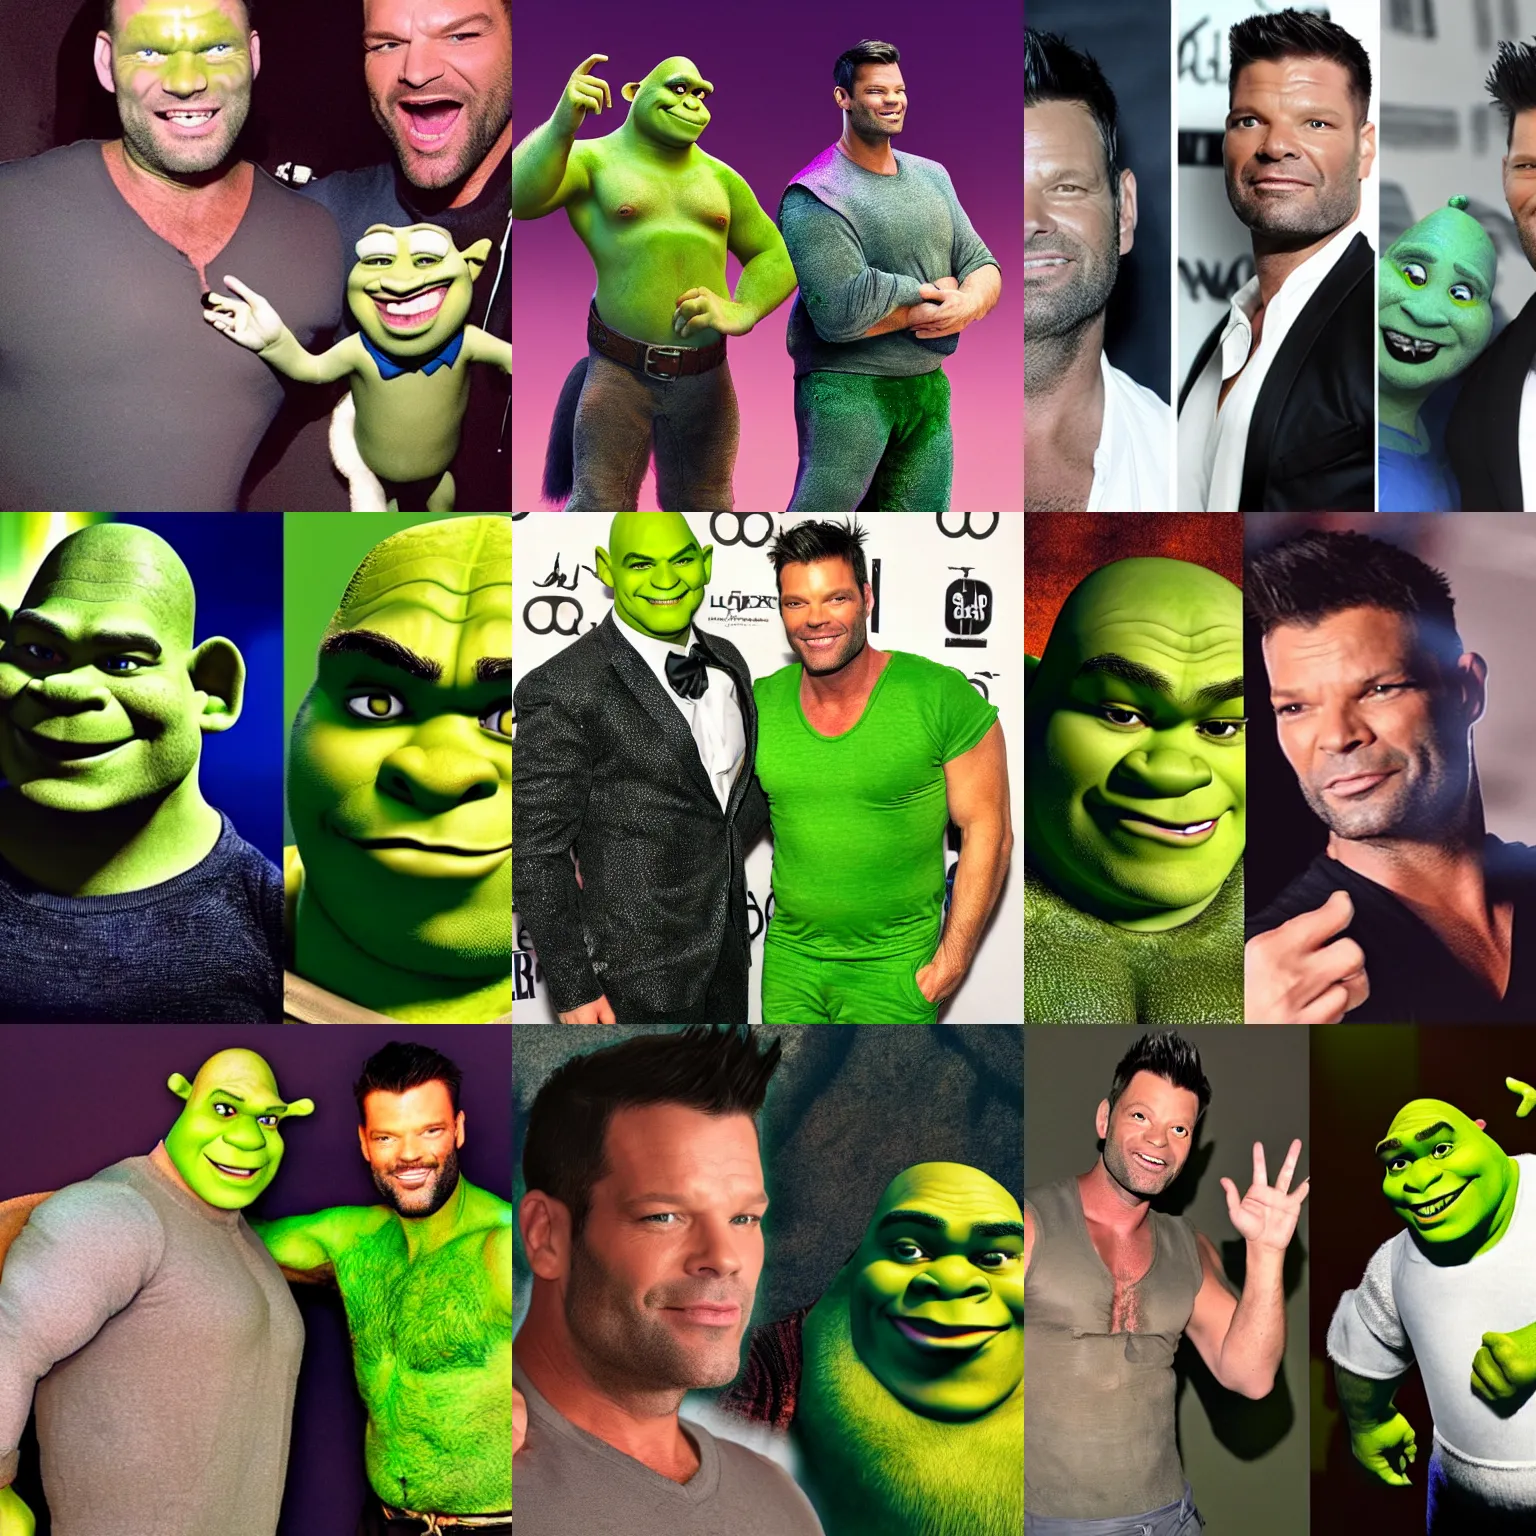 Prompt: Shrek and Ricky Martin chimera